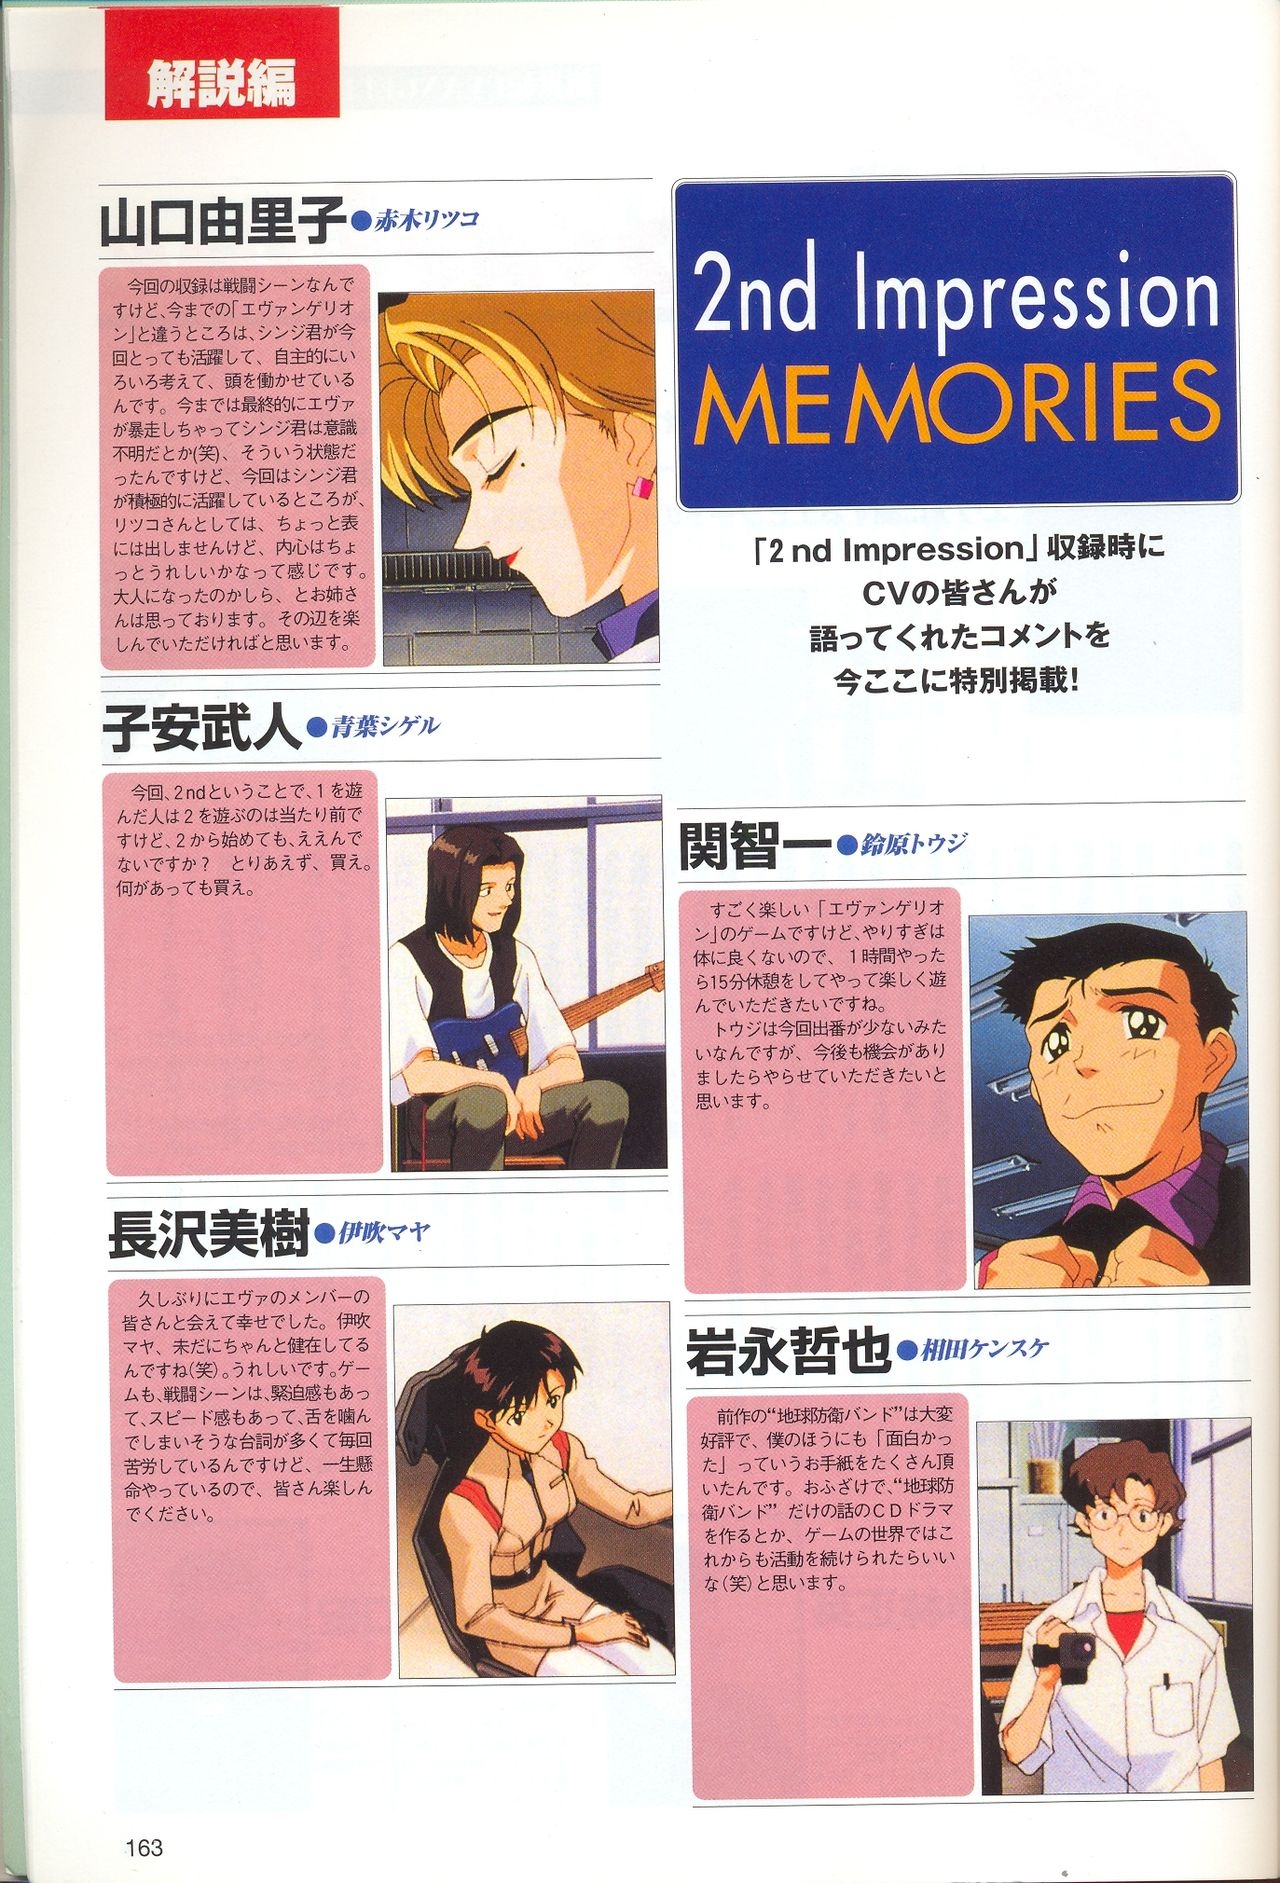 Neon Genesis Evangelion - 2nd Impression Sega Saturn Perfect Guide 162